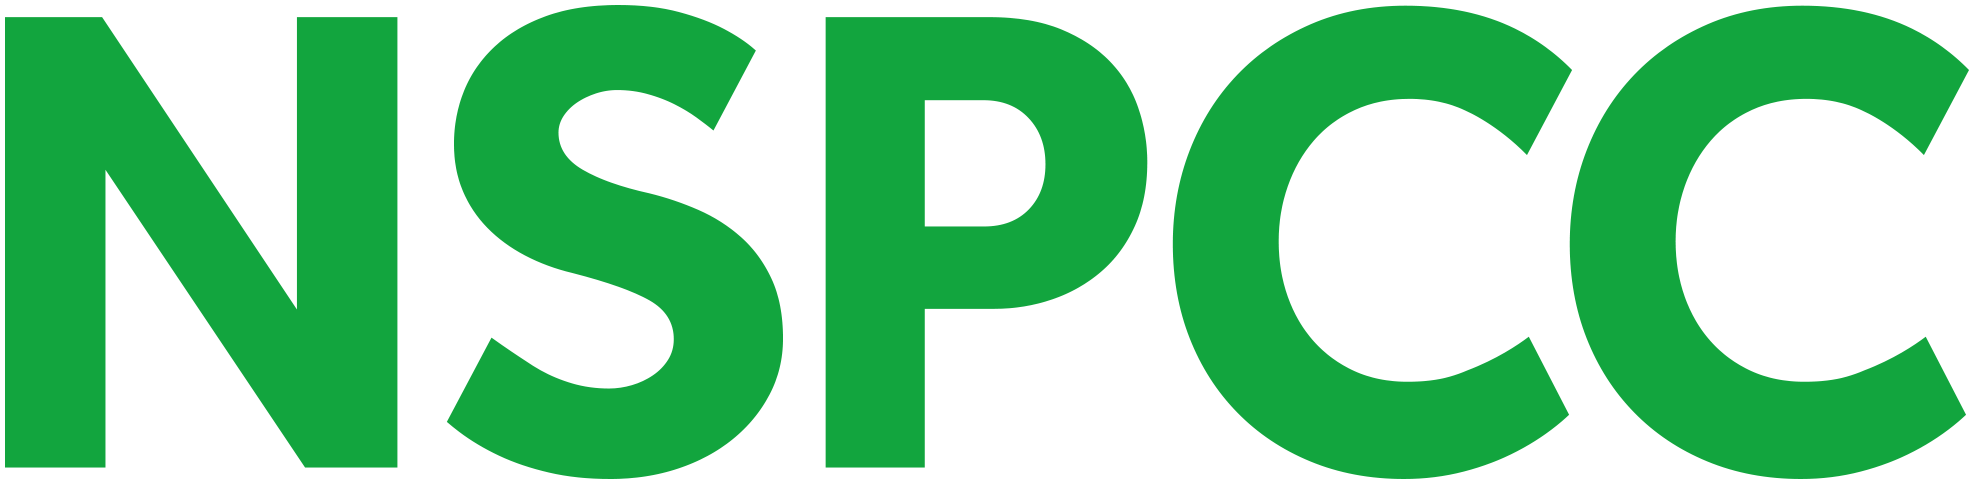 NSPCC_logo